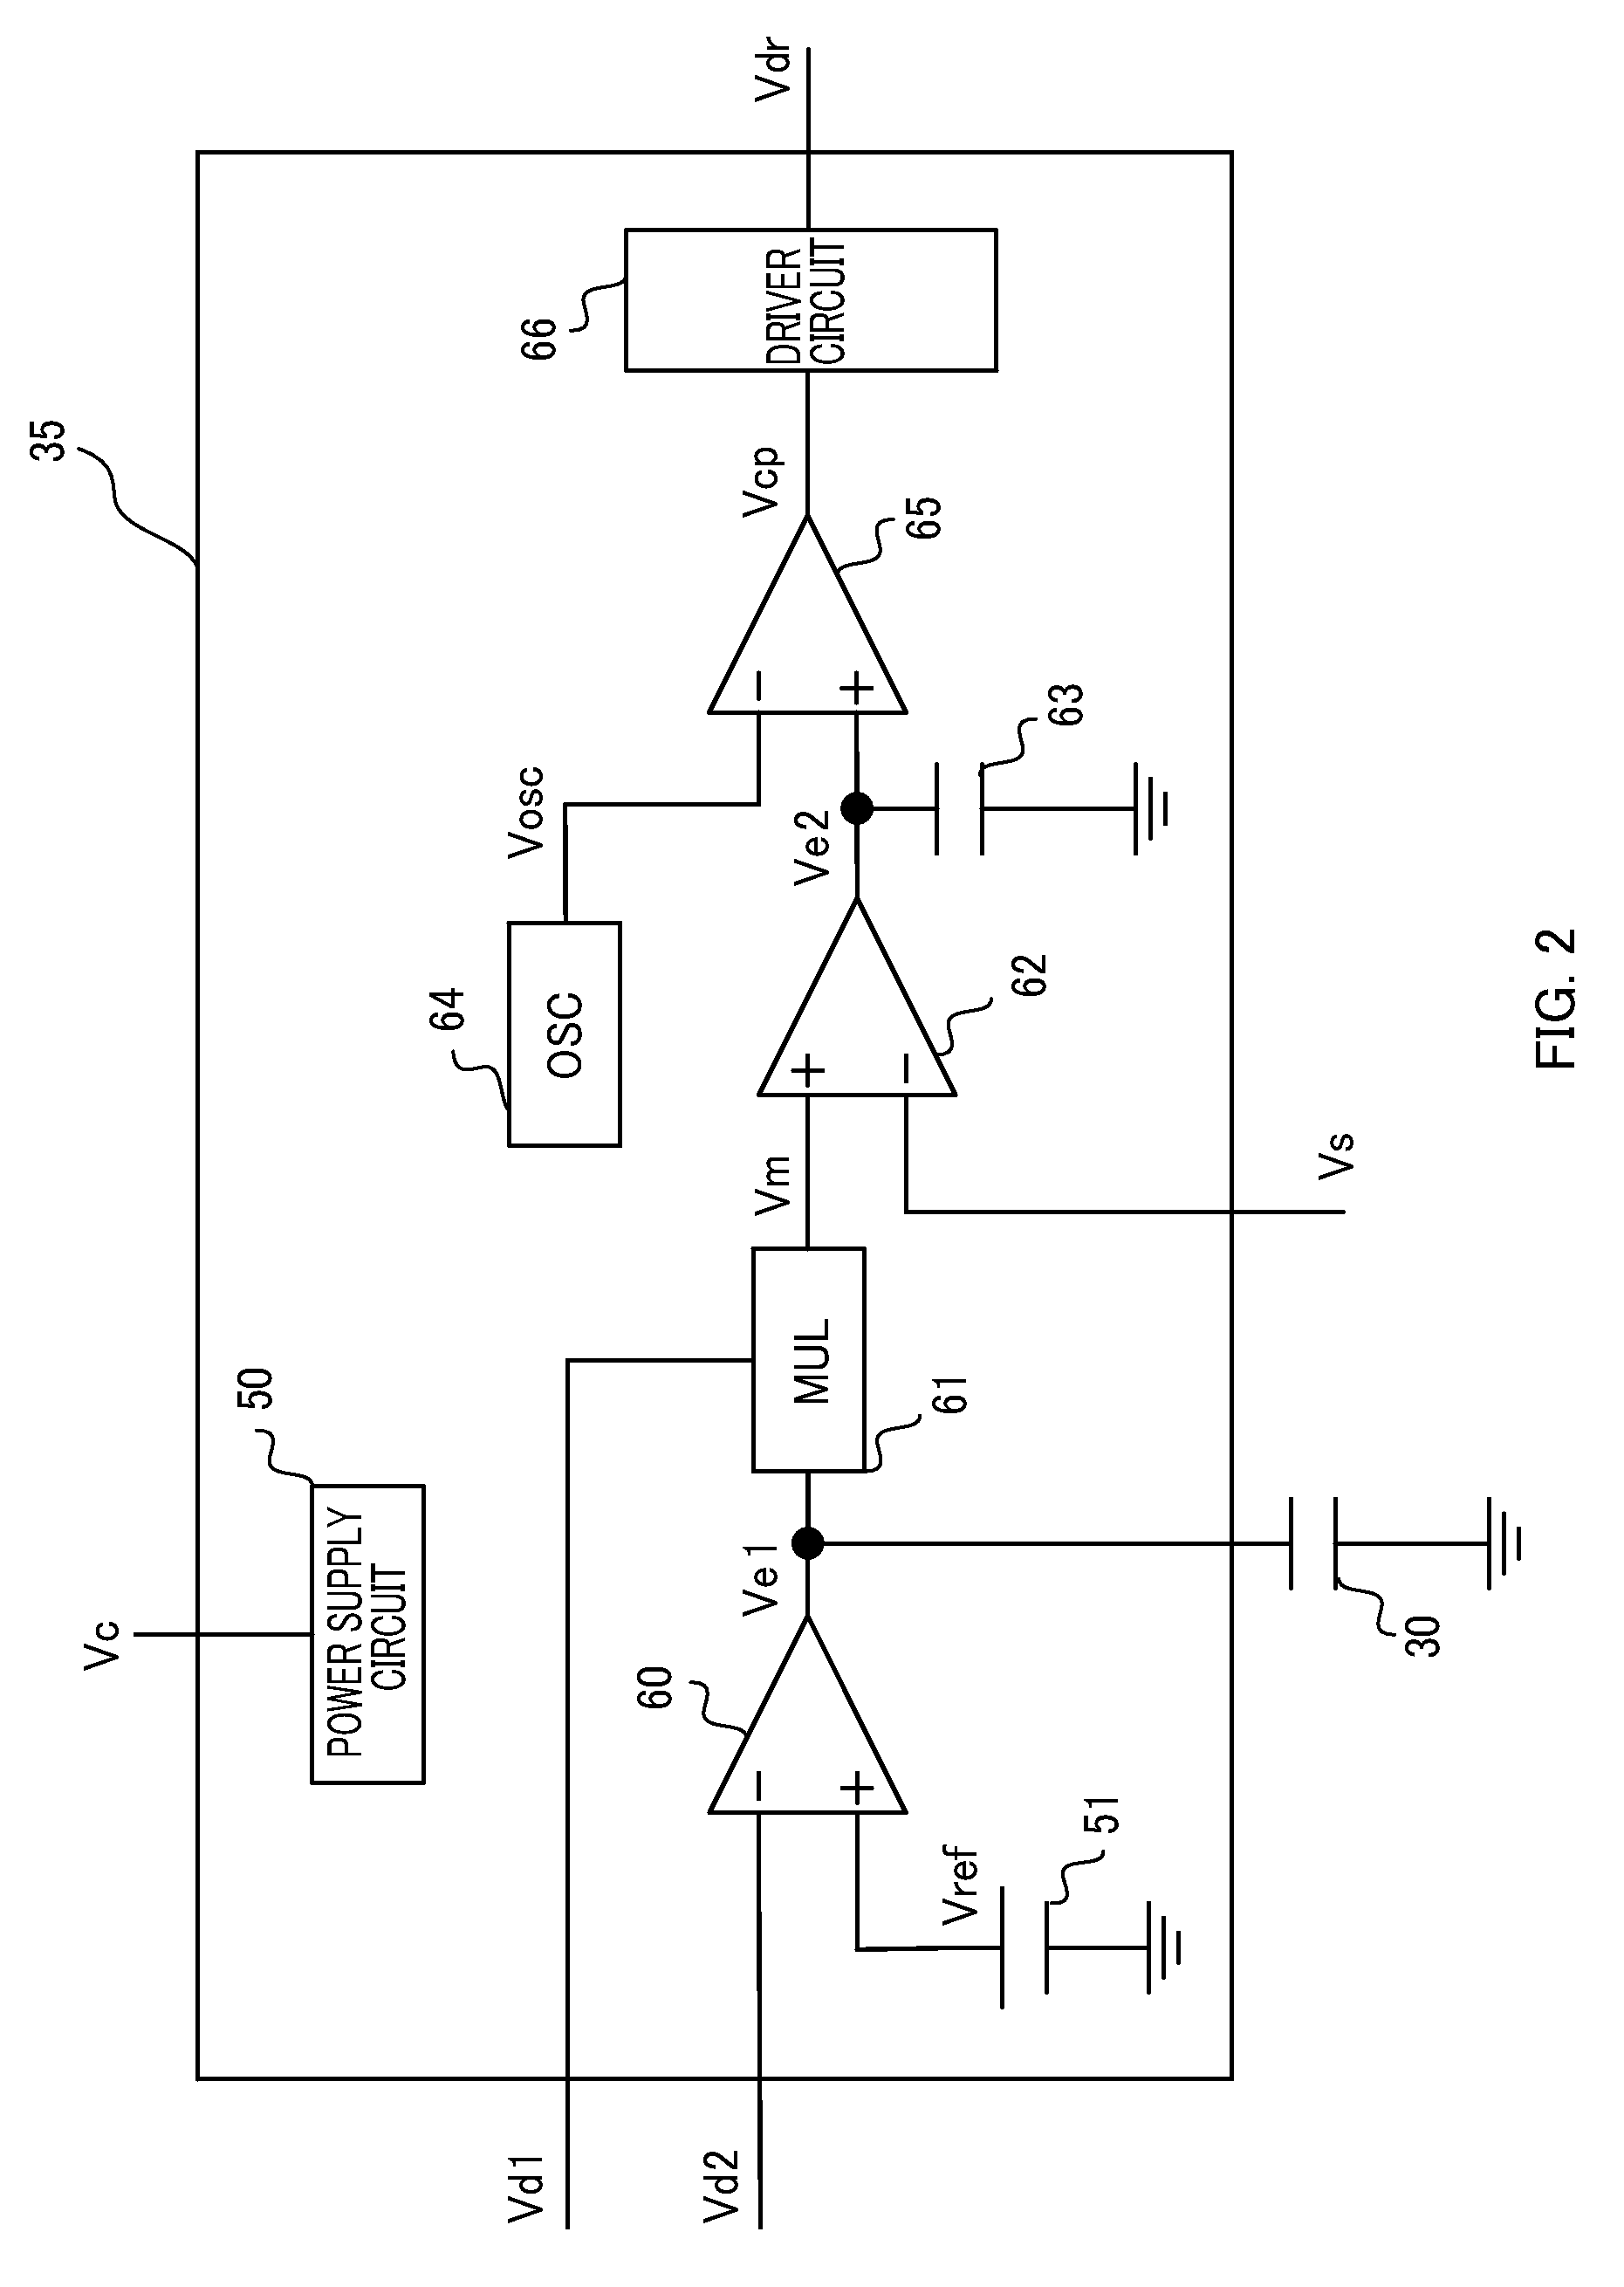 Light-emitting diode driver circuit and lighting apparatus